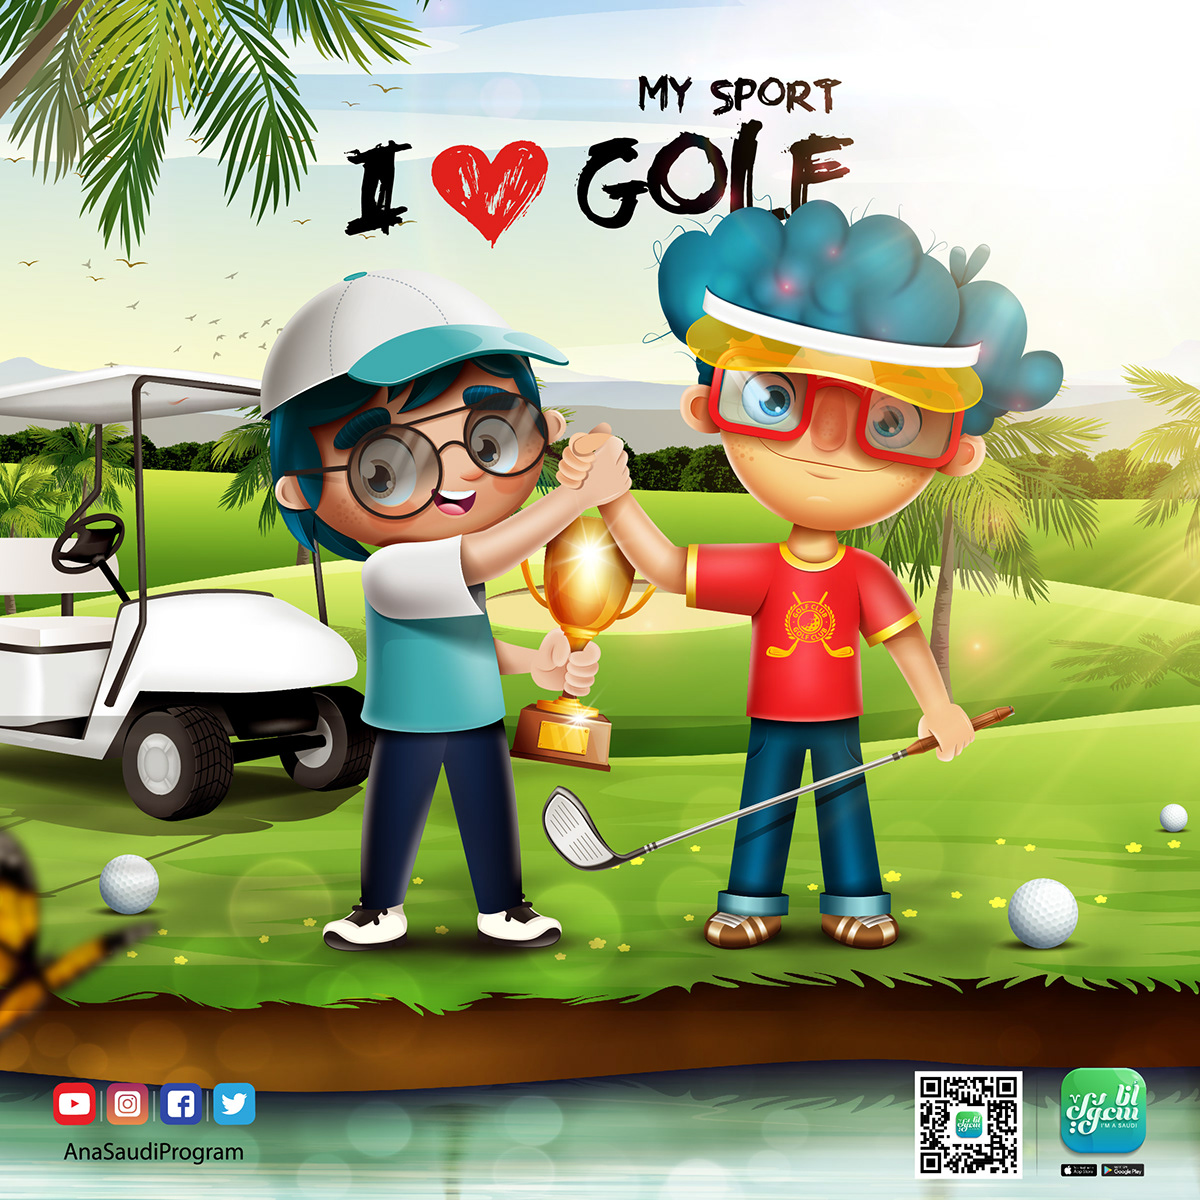 Arab girl Arab kids cartoon golf golf ball golf character golf course happy kids kids golf serag basel حمزة نمرة 